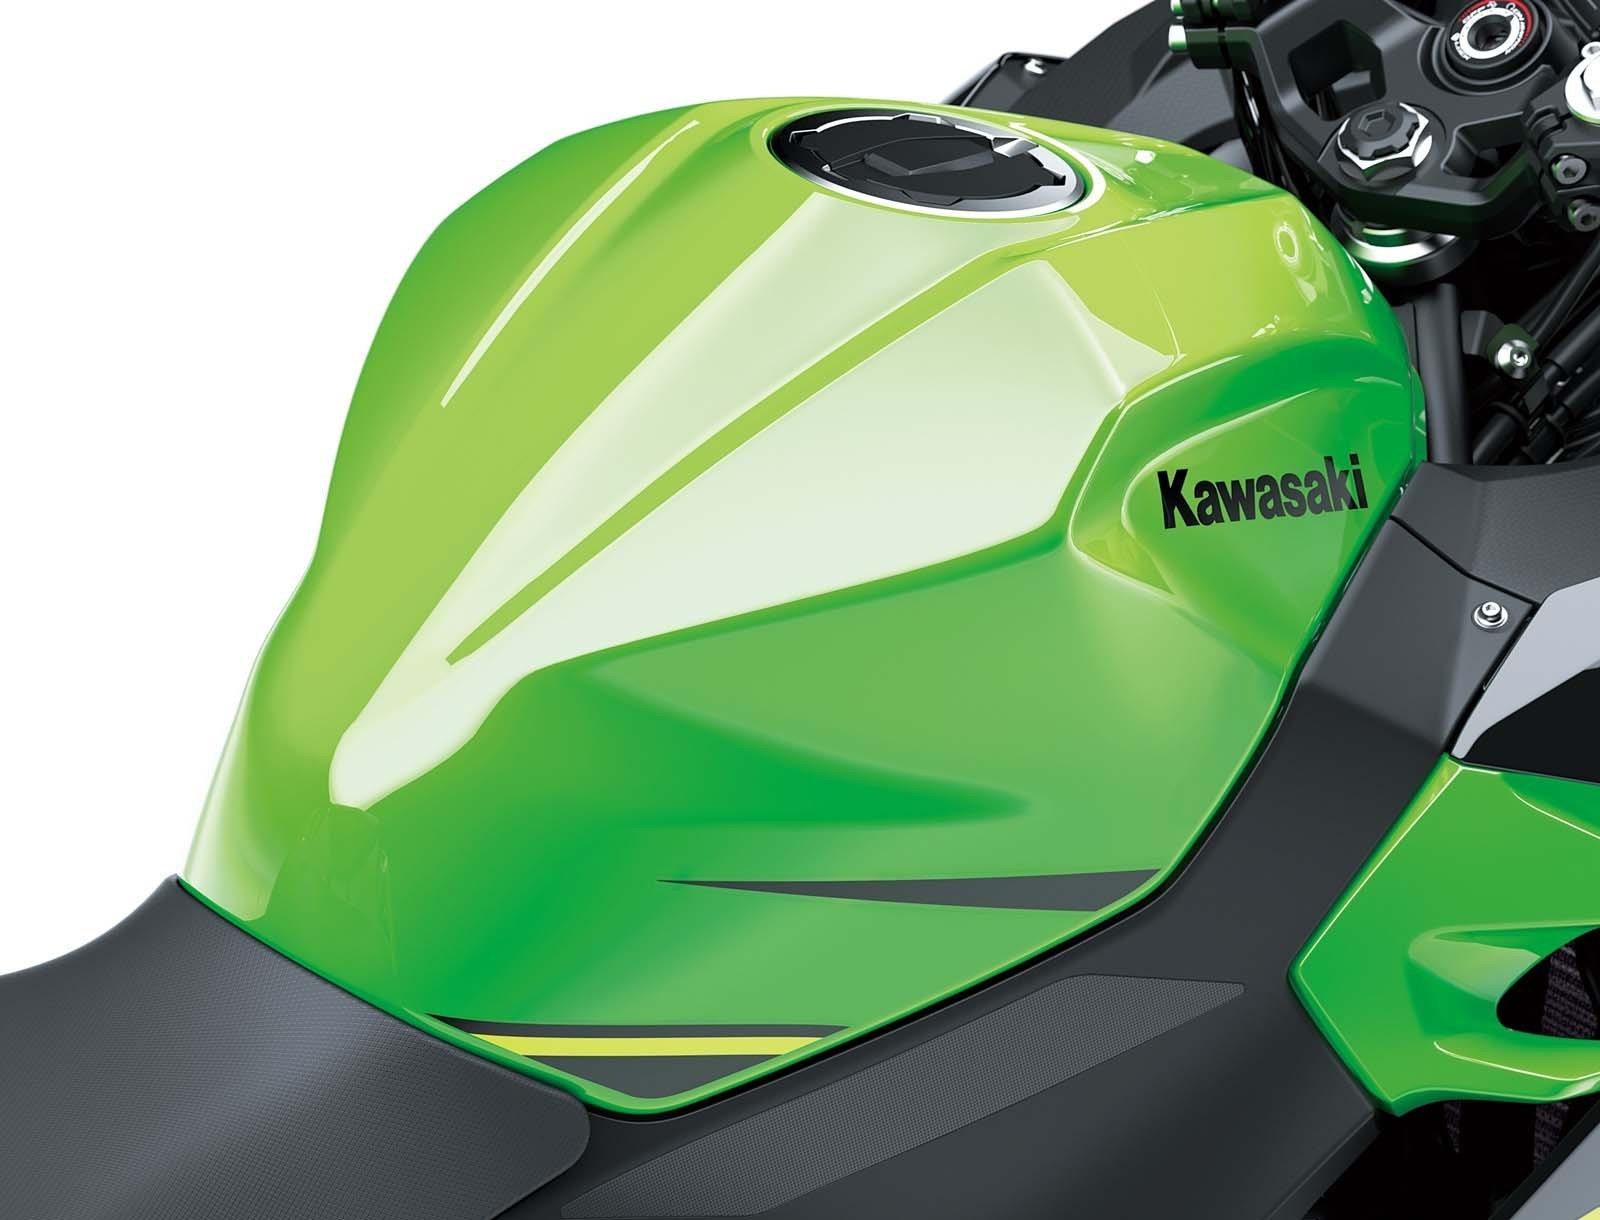 2018-Kawasaki-Ninja-400-03-1.jpg